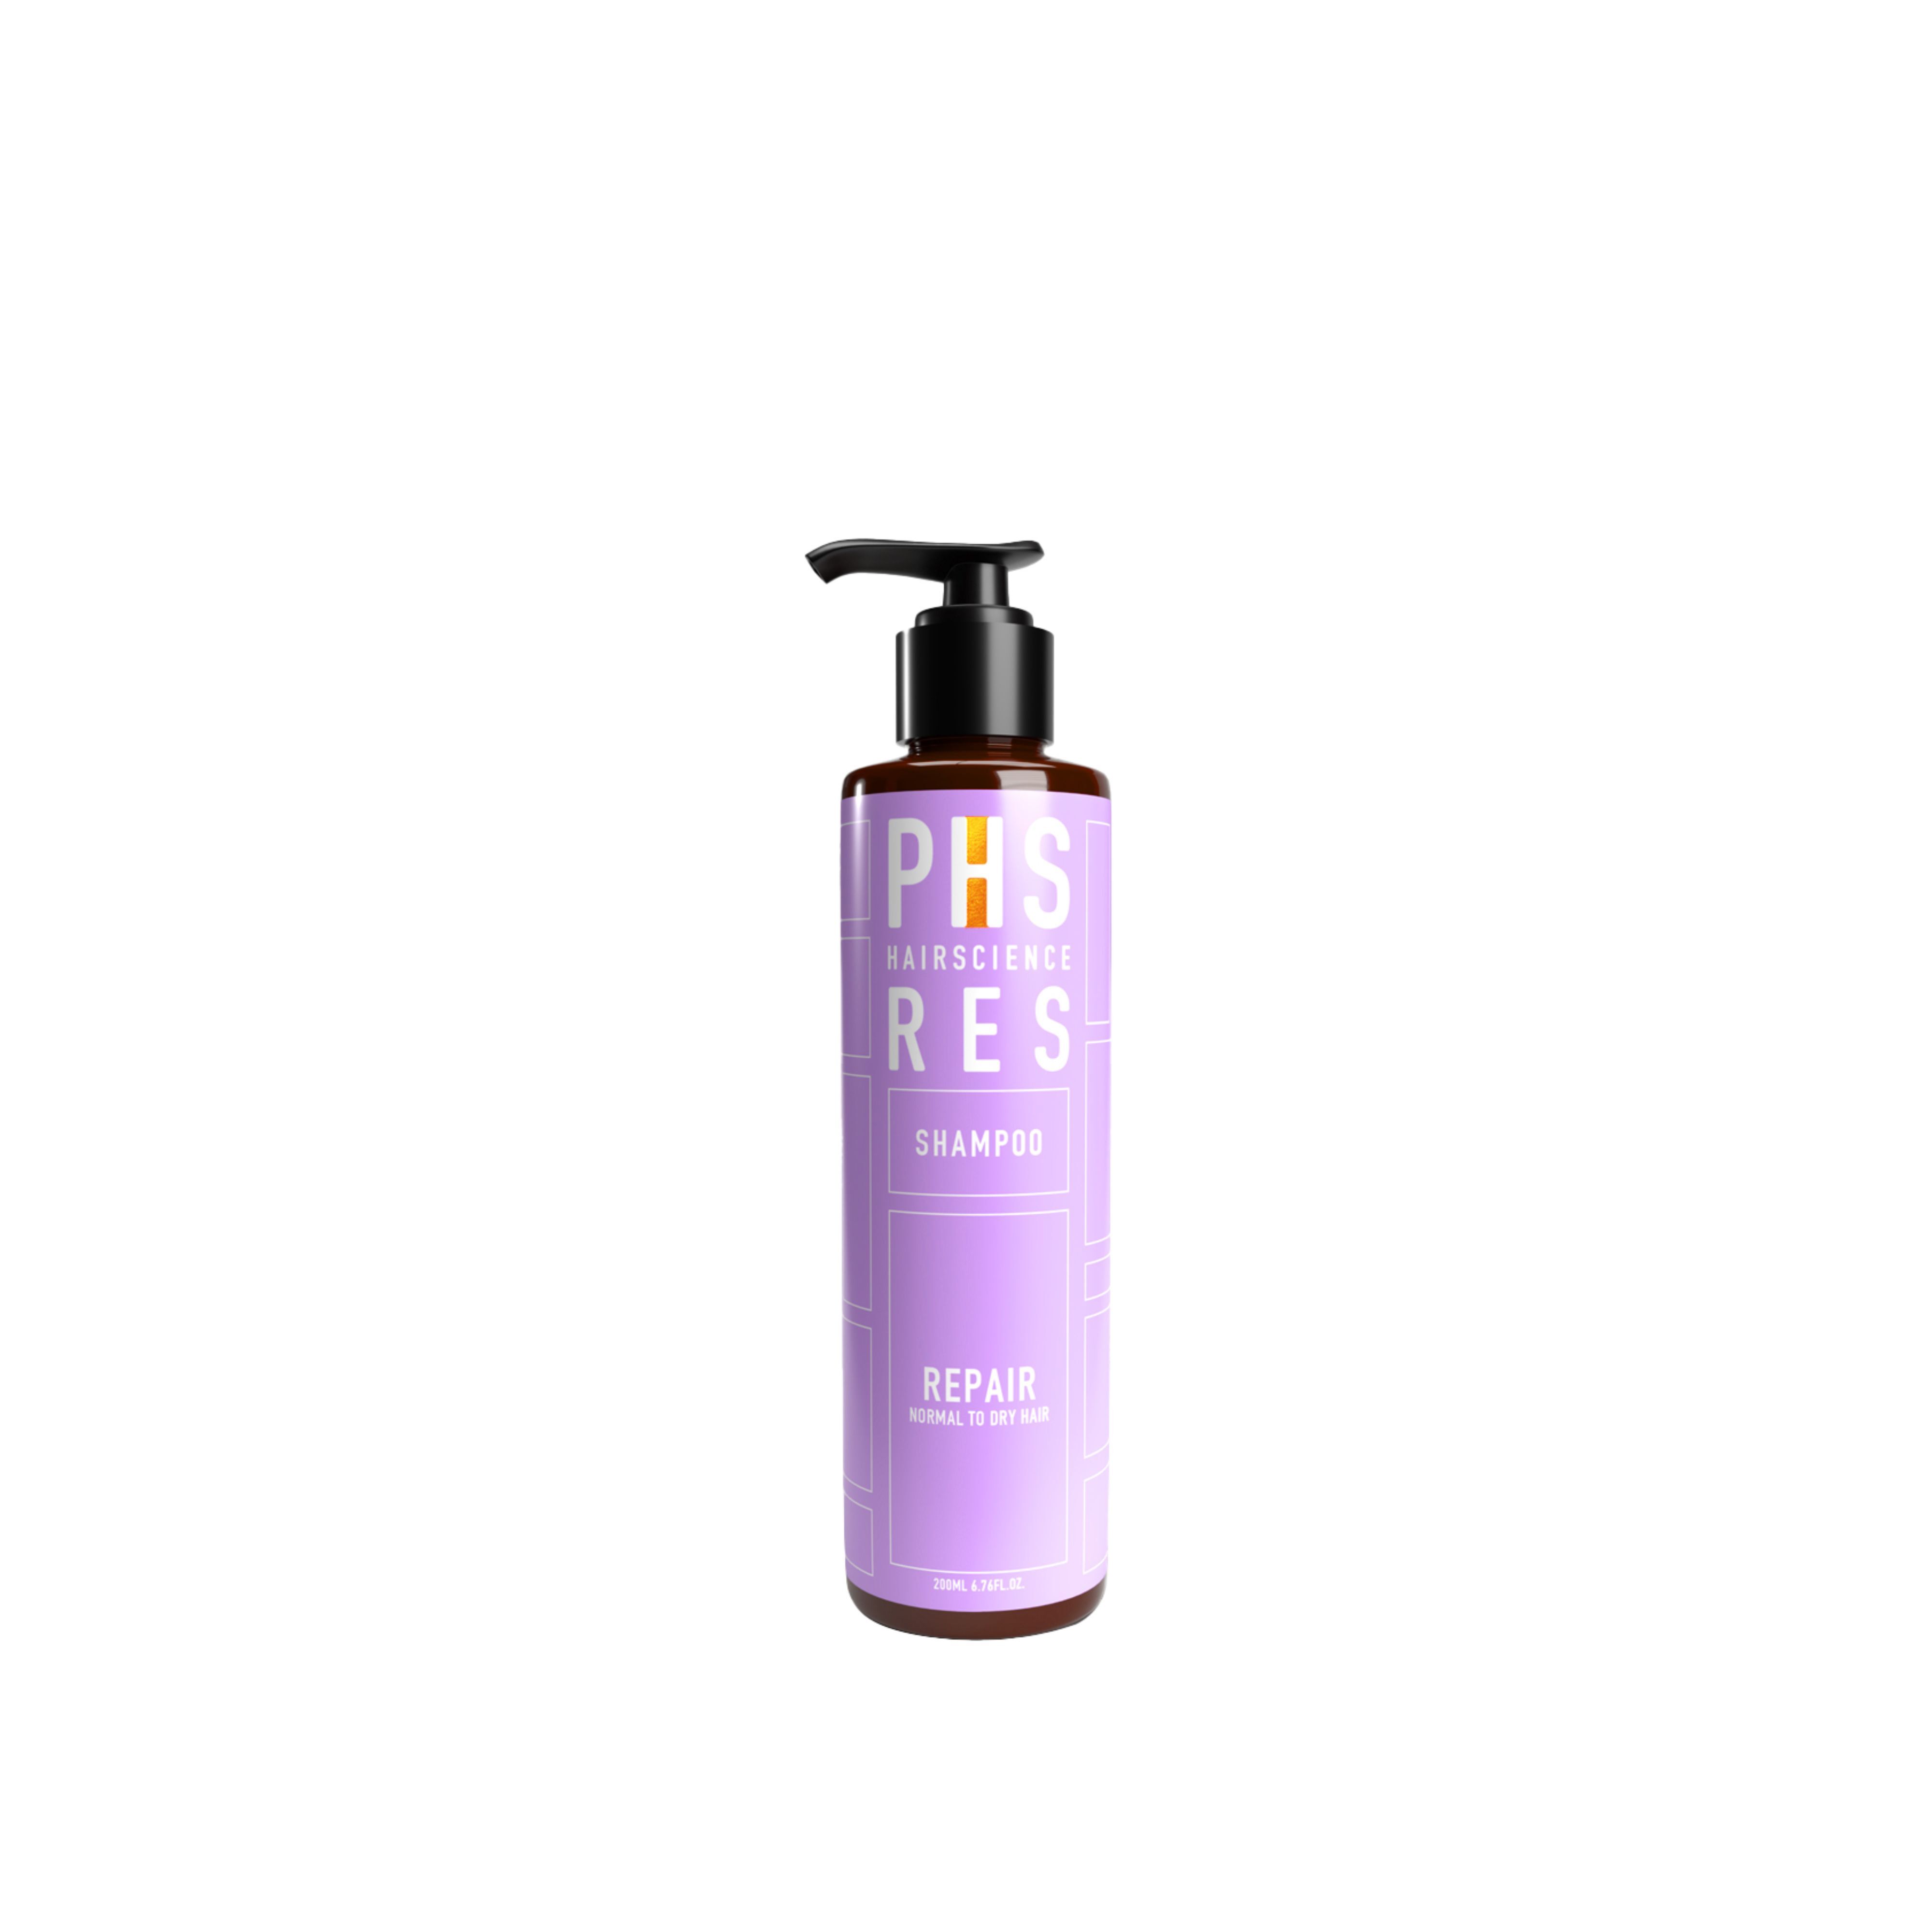 PHS Hairscience RES Repair Shampoo